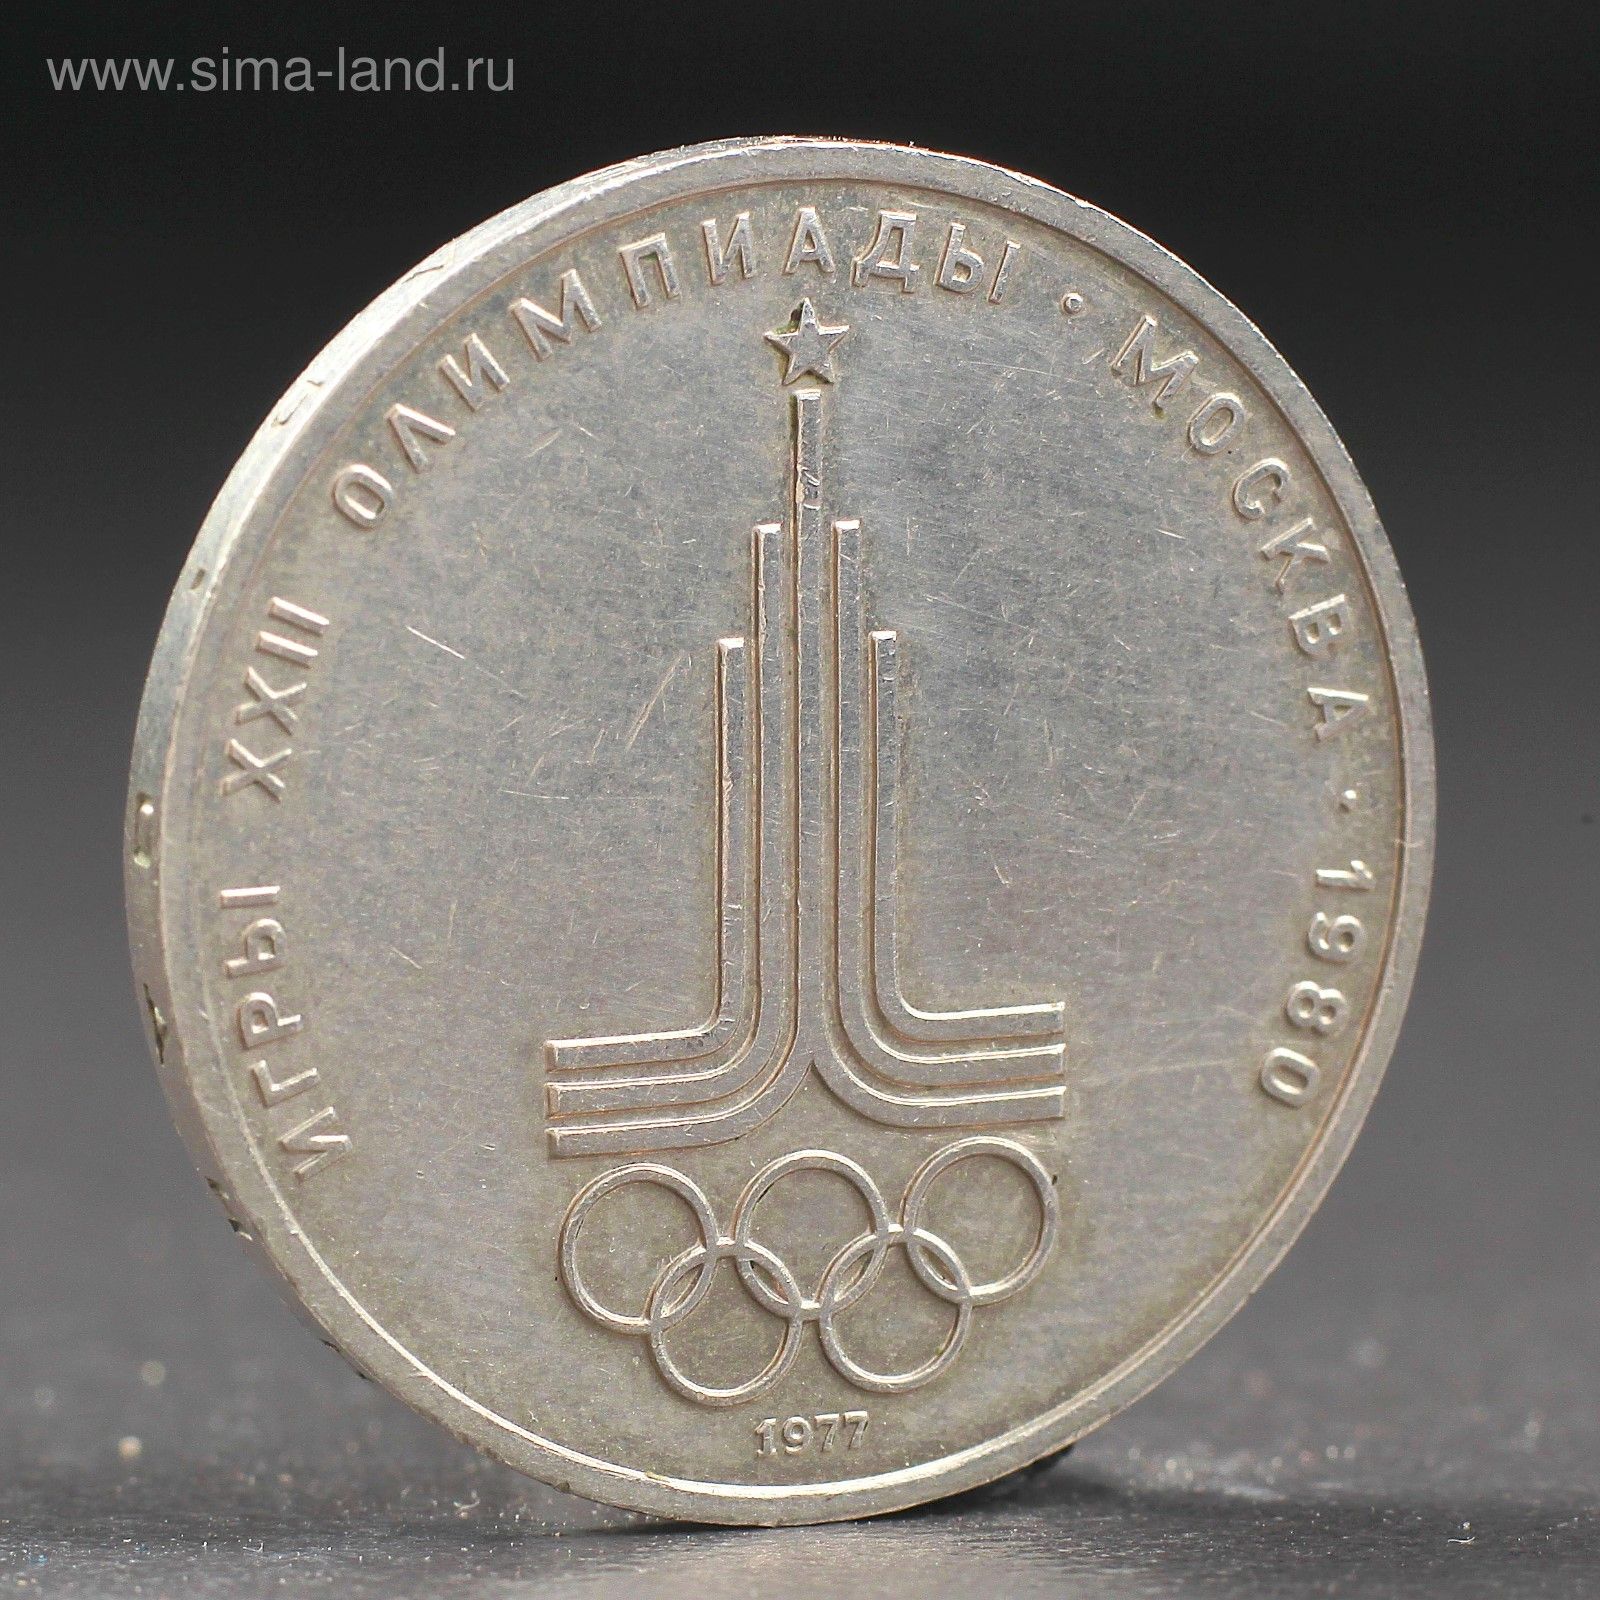 1 80 в рублях. Монета СССР 1 рубль 1980 года Олимпийский. Монета 1 рубль 1977 года. Олимпийский рубль 1977.